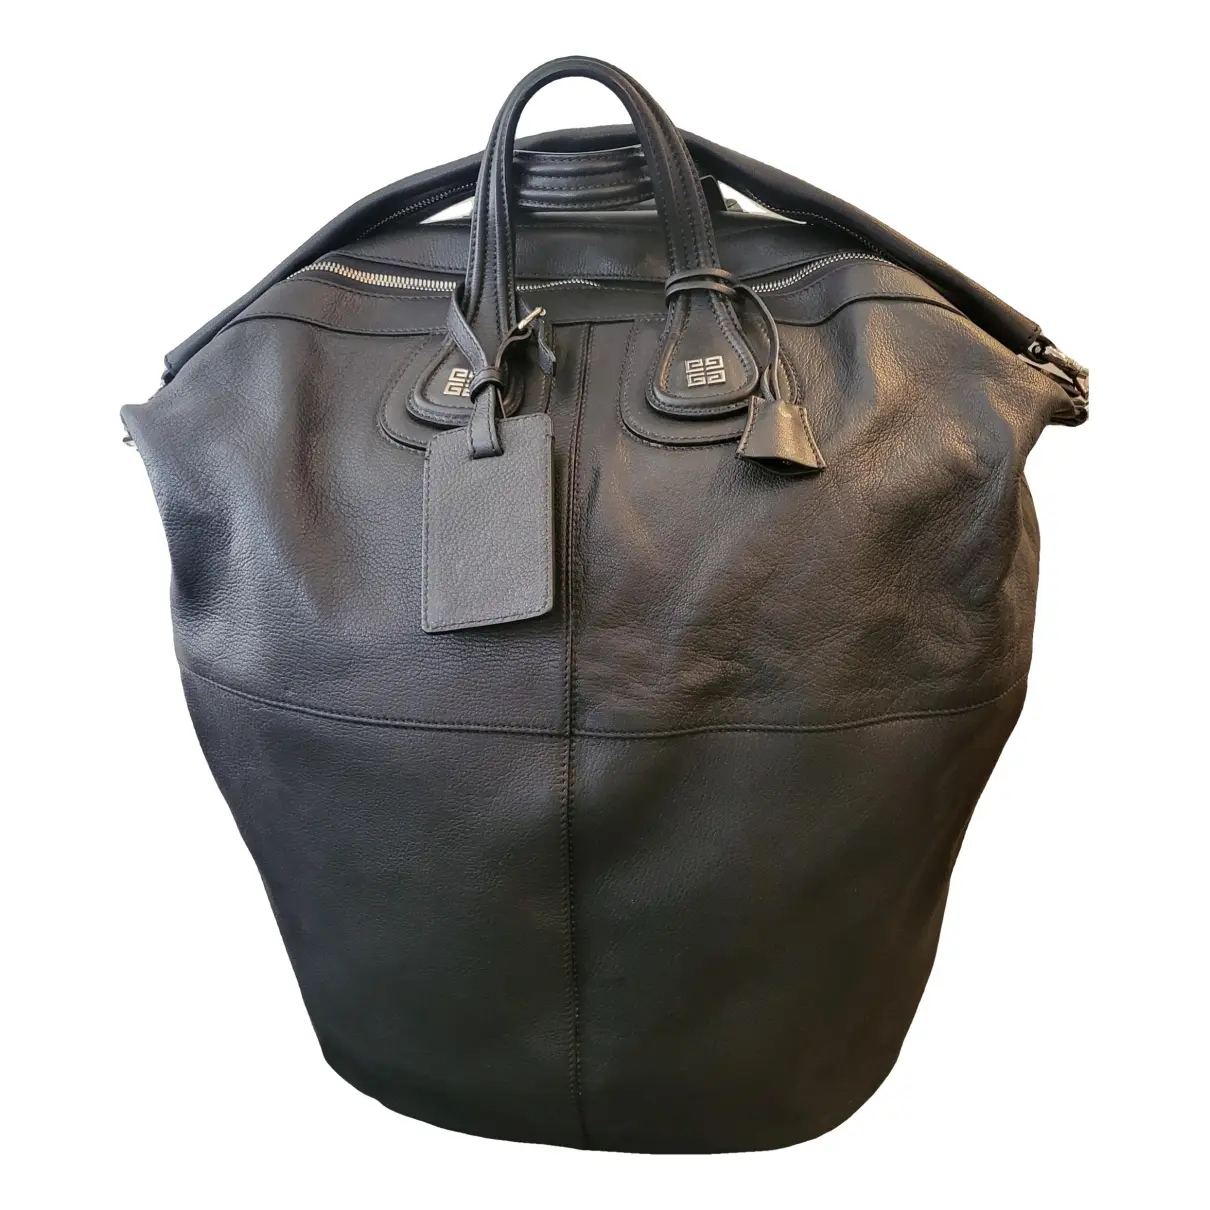 Nightingale leather travel bag